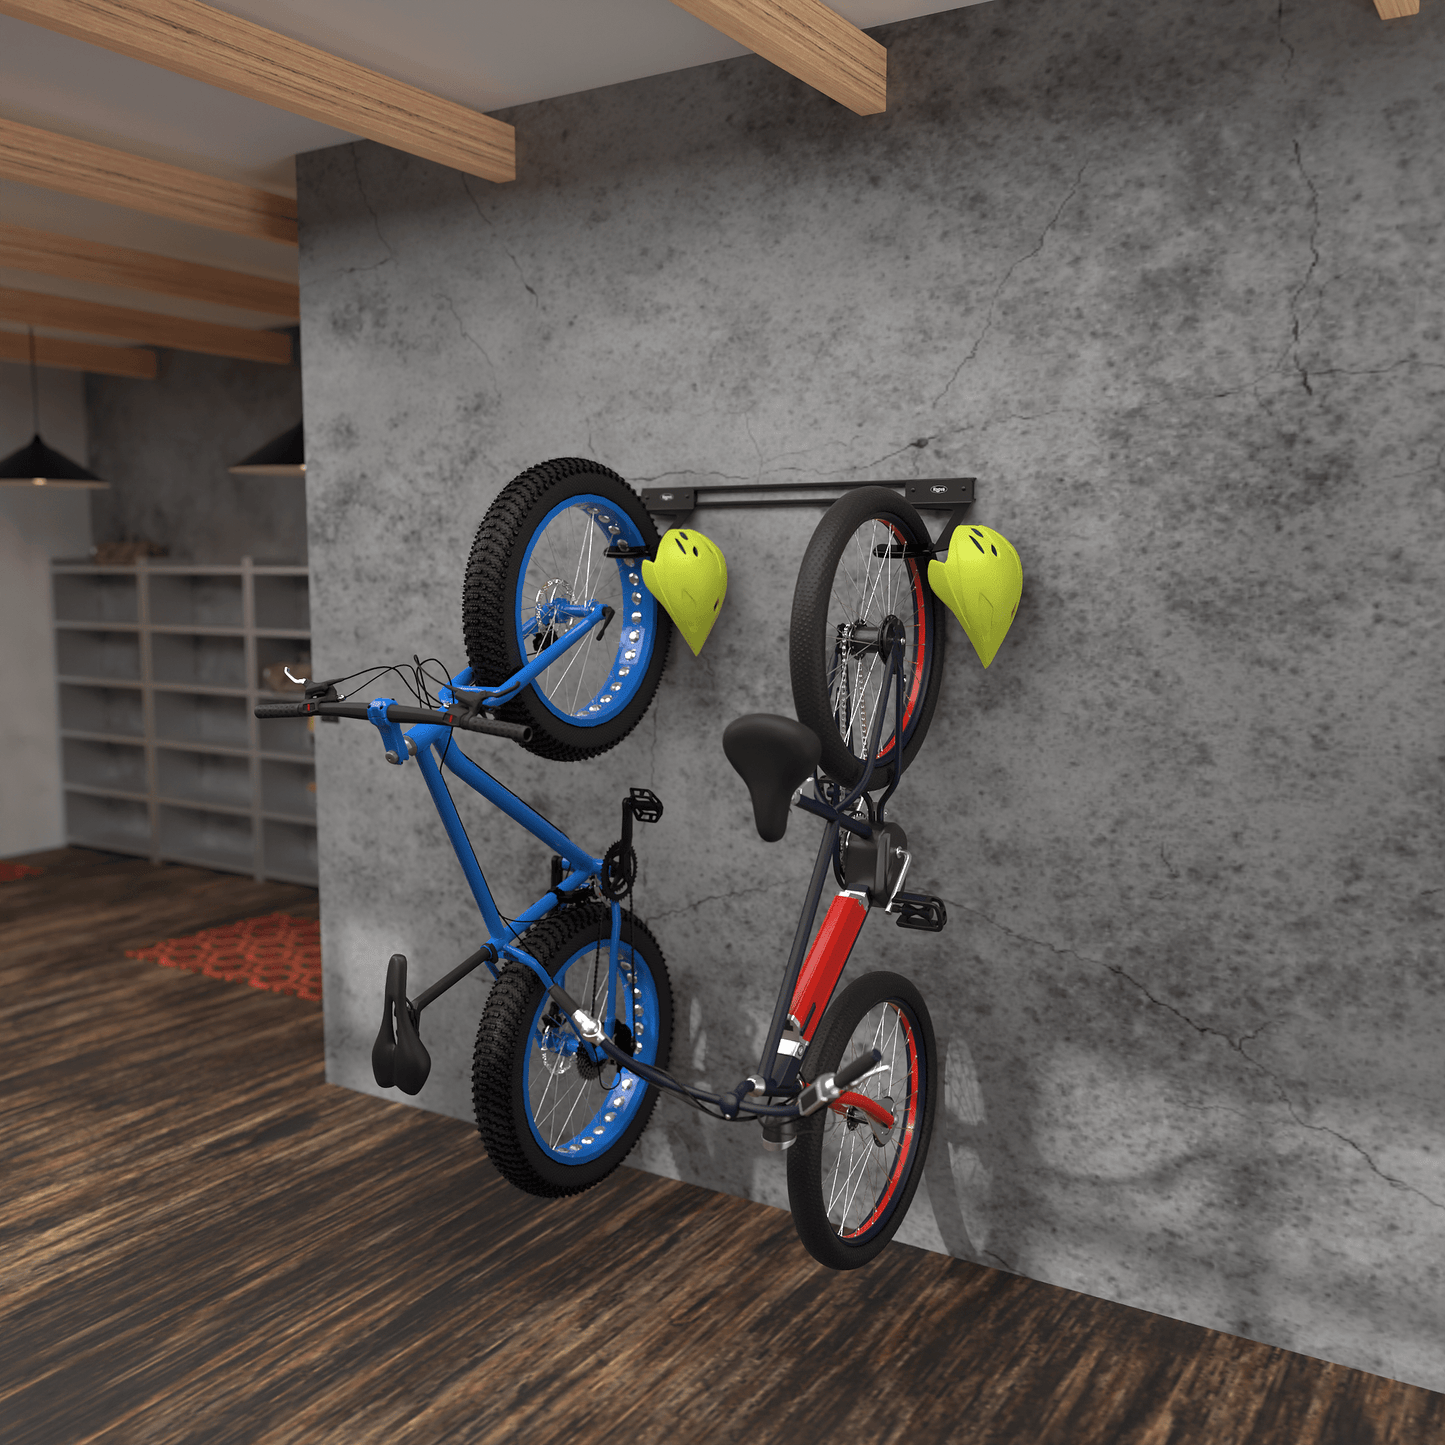 Koova E-Bike Wall Rack for 2 Jumbo Bikes